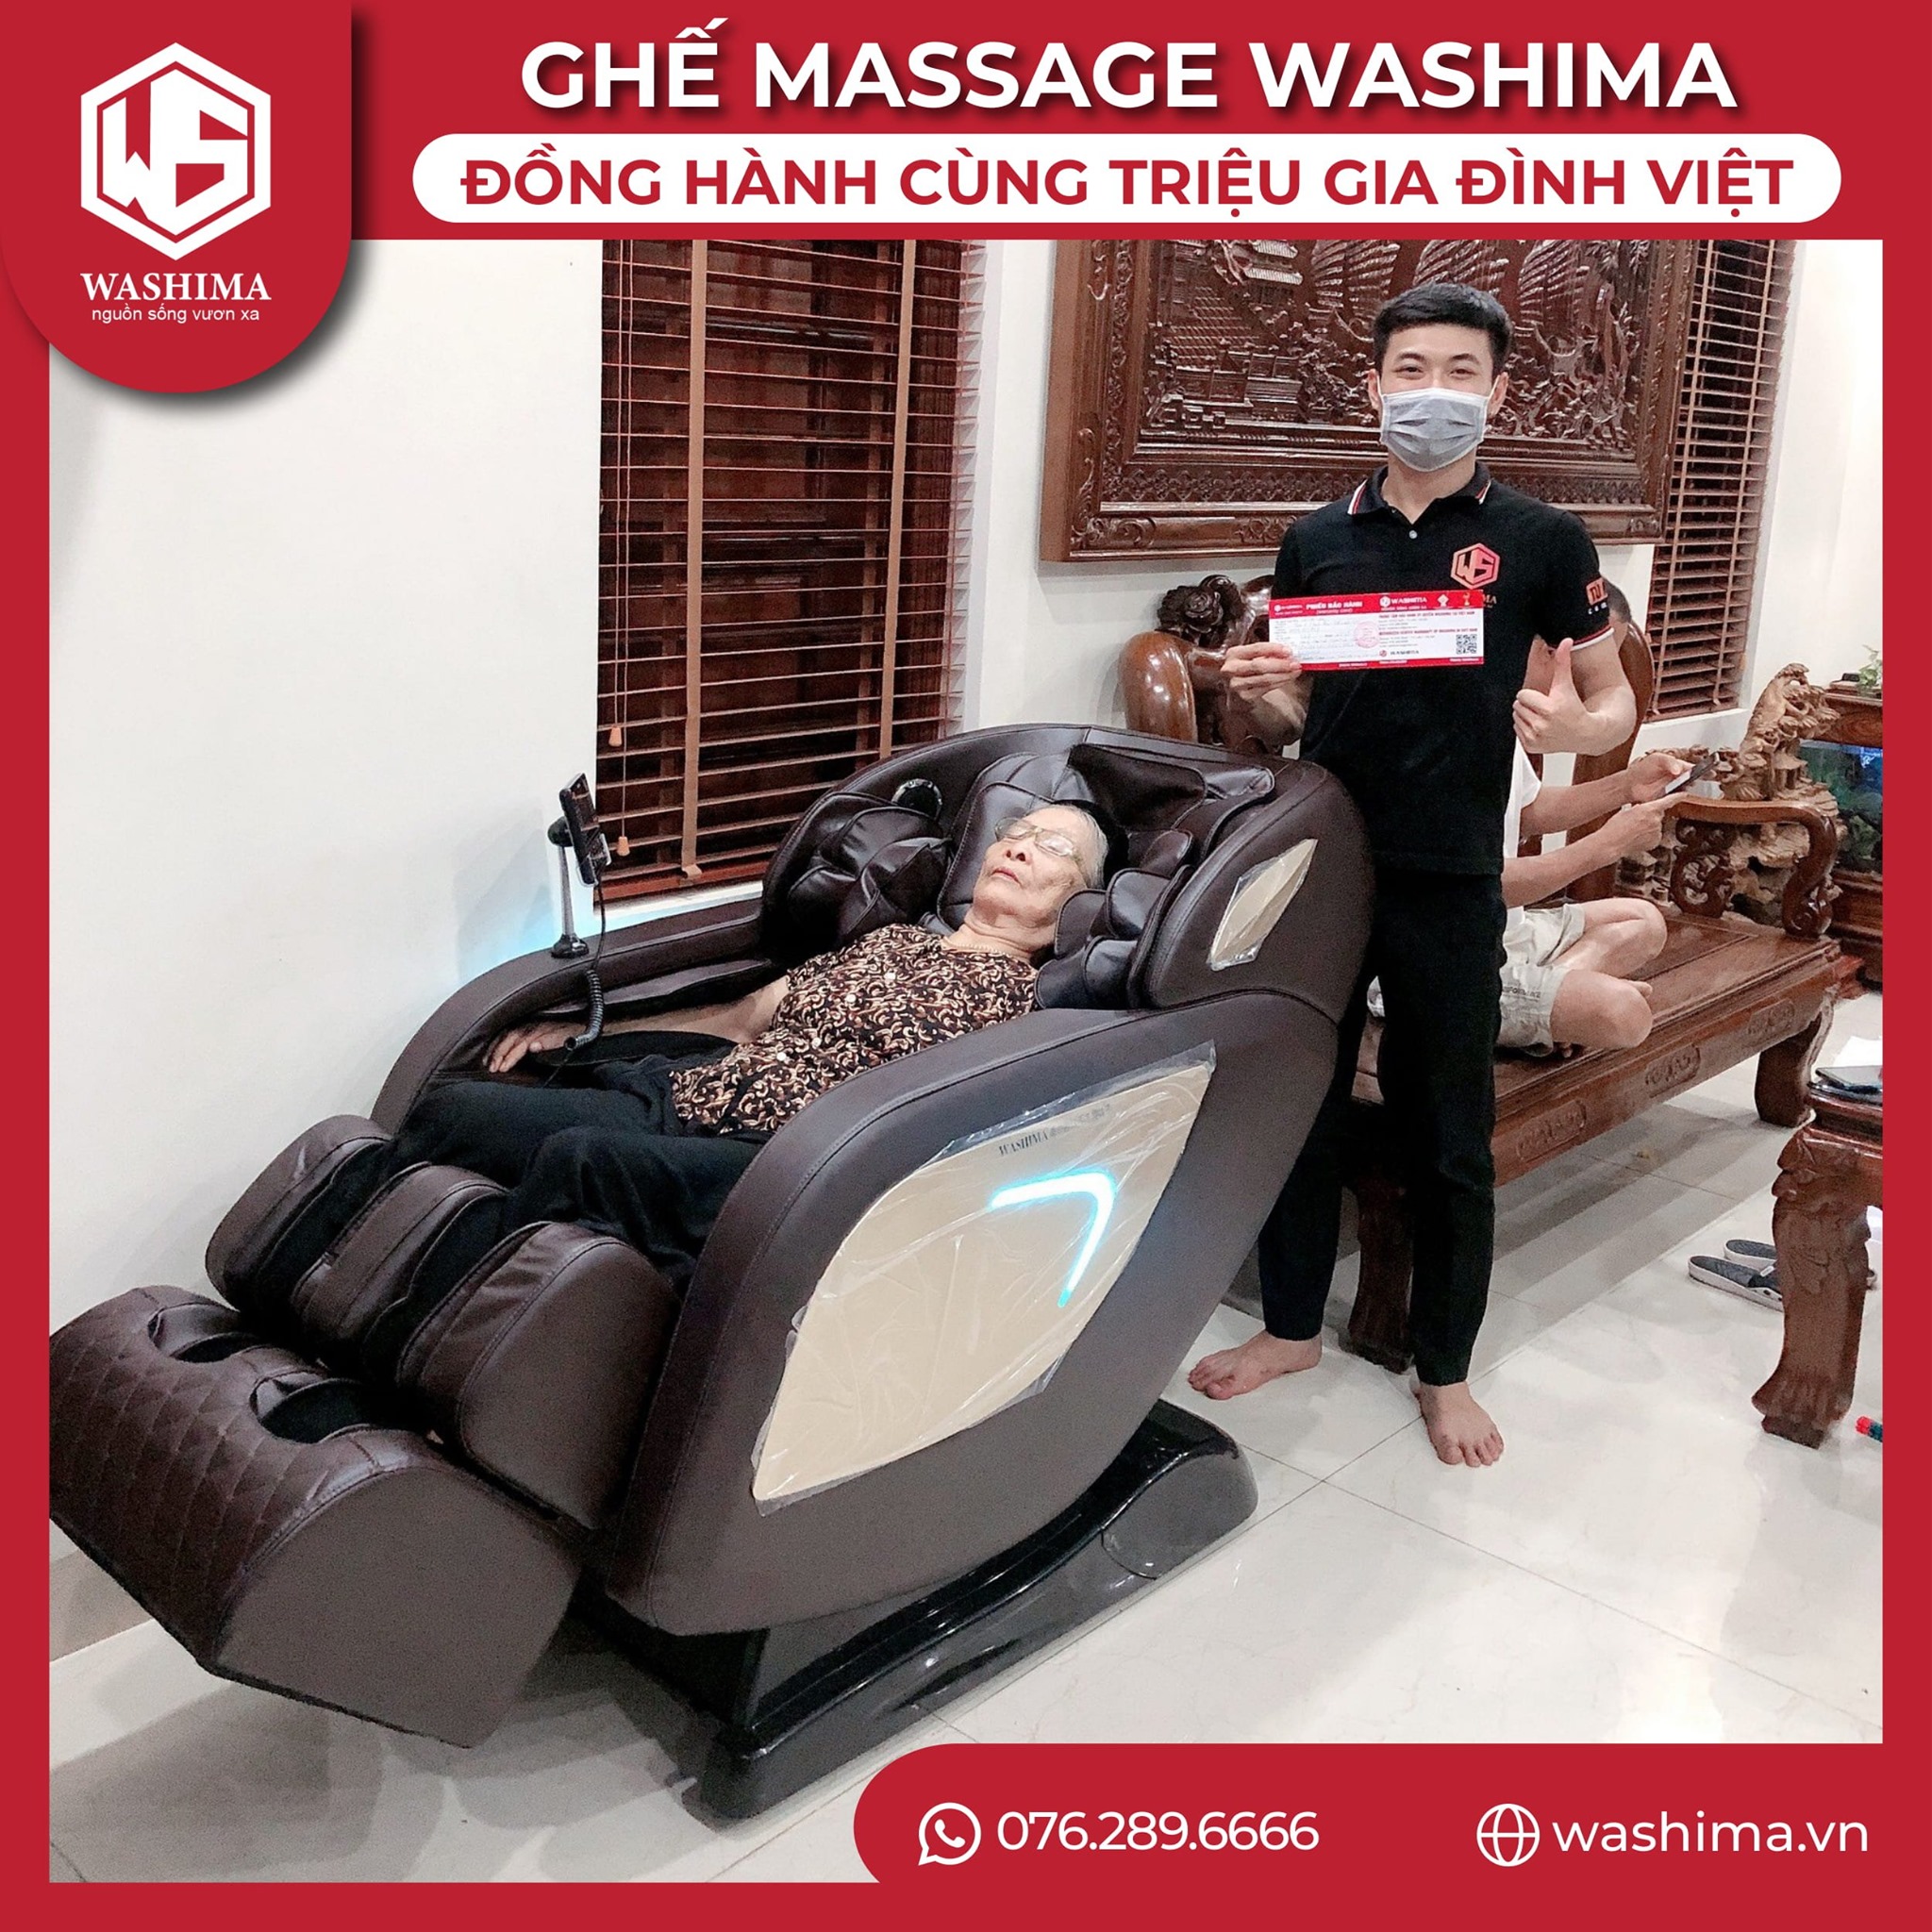 Sửa chữa ghế massage tại nhà Washima